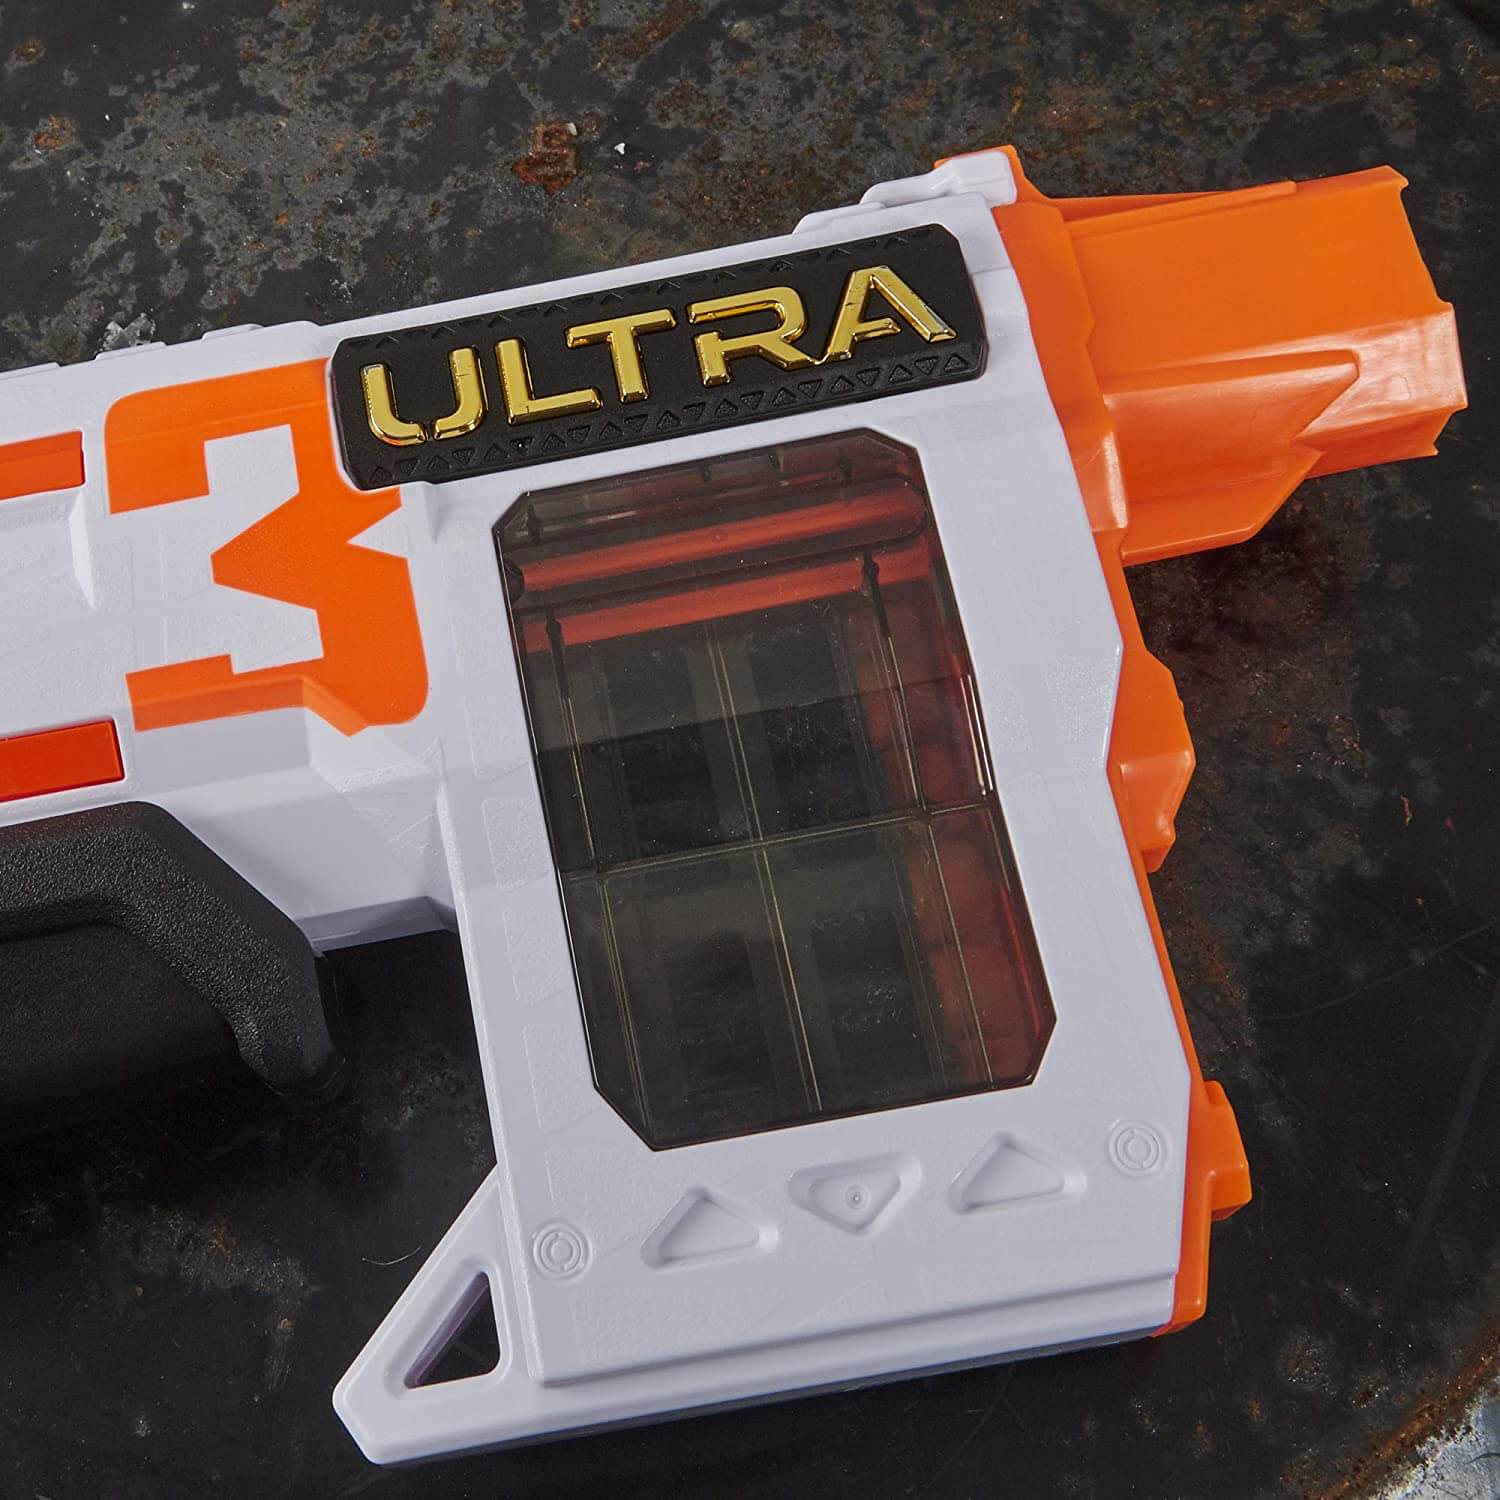 NERF Ultra Three Pump Action Blaster